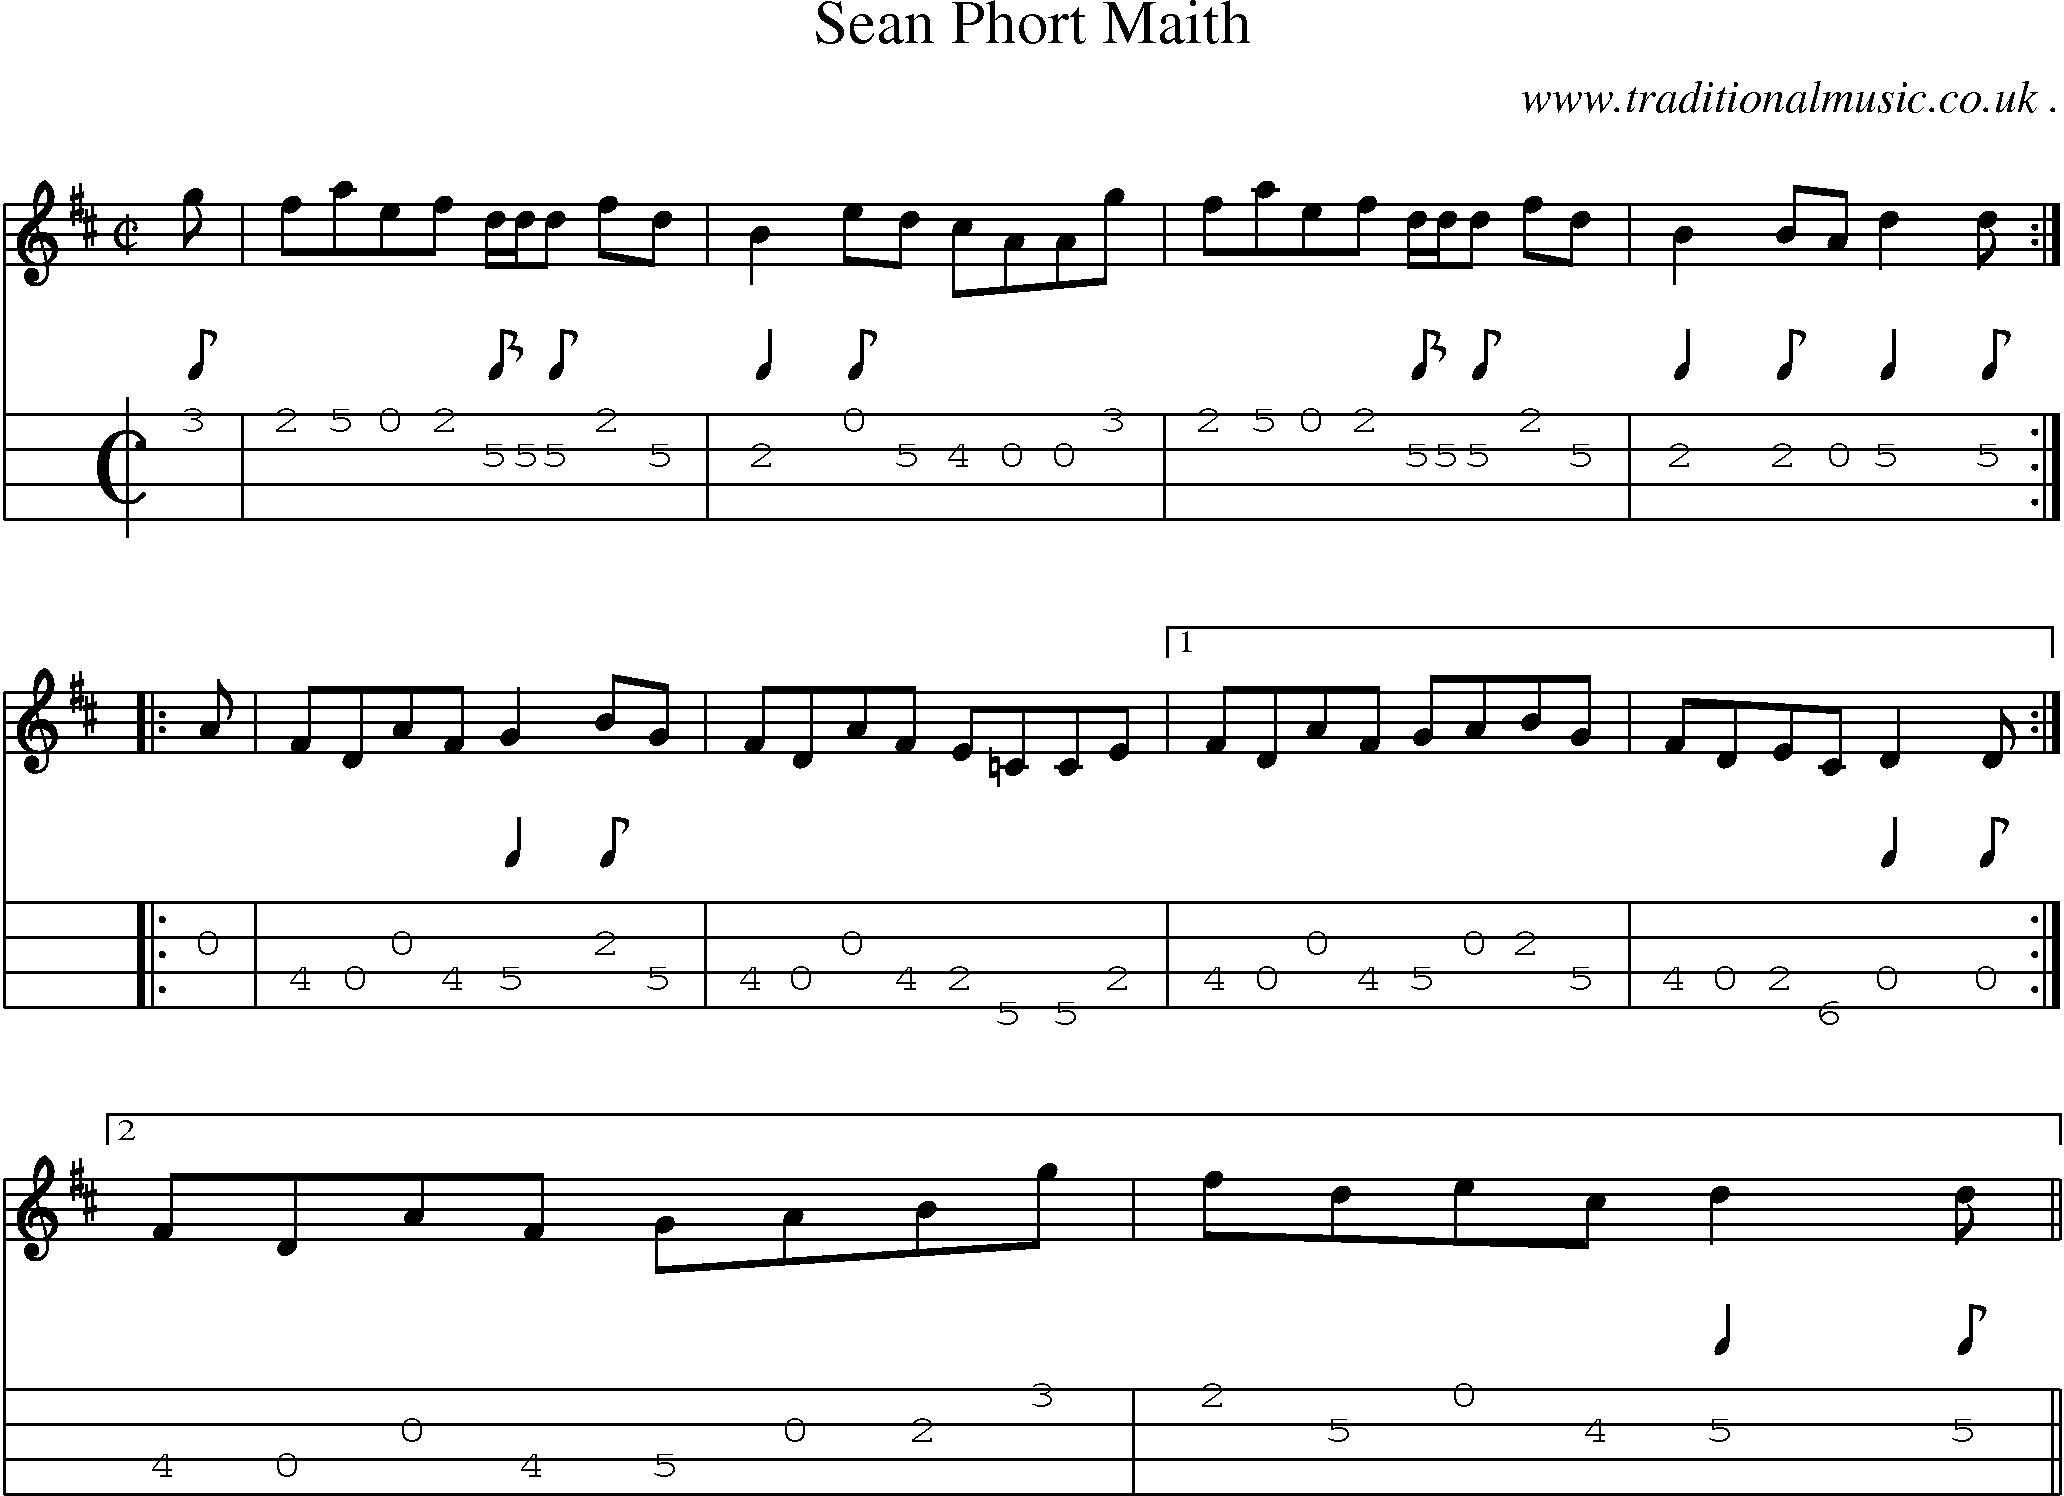 Sheet-music  score, Chords and Mandolin Tabs for Sean Phort Maith